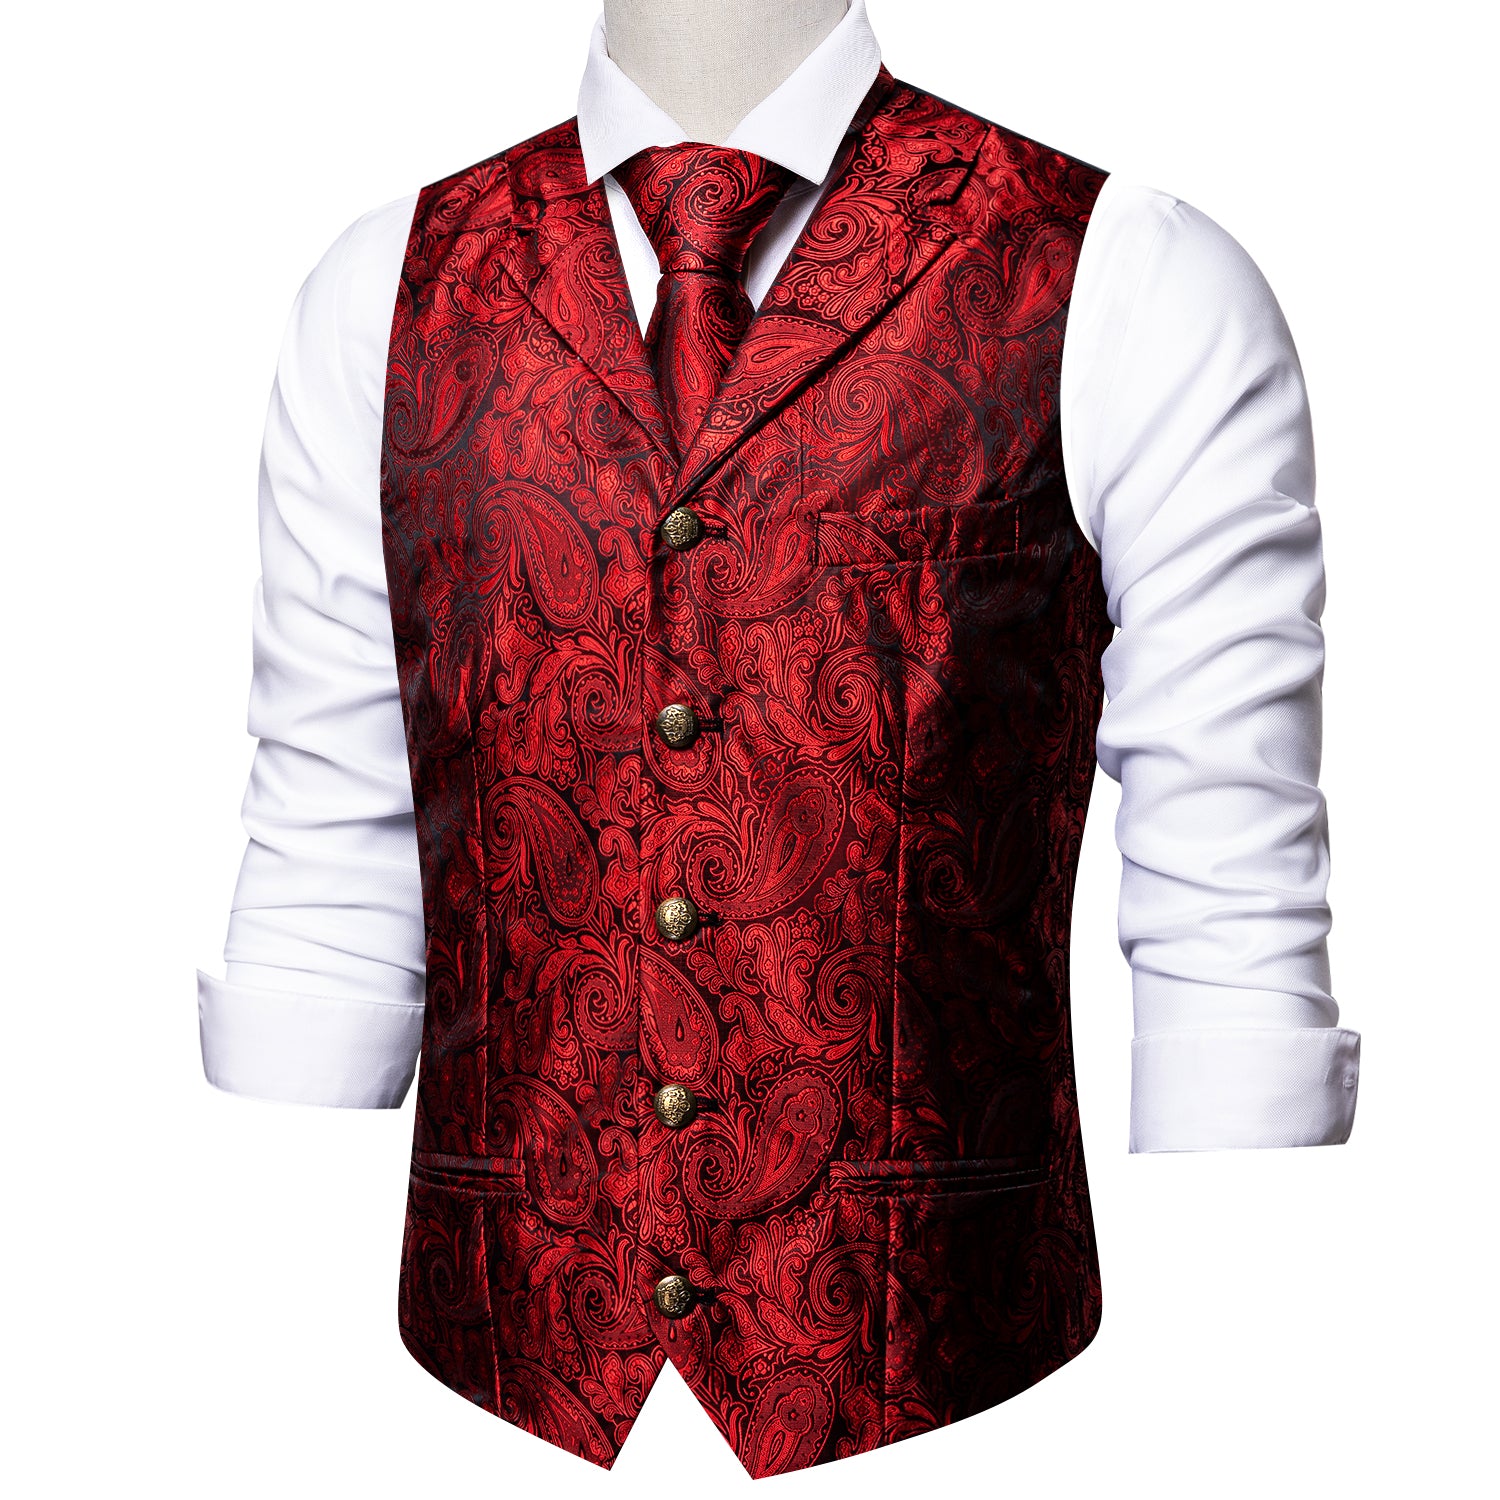 Barry.wang Men's Vest Bright Red Paisley Silk Vest Necktie Pocket Square Cufflinks Set